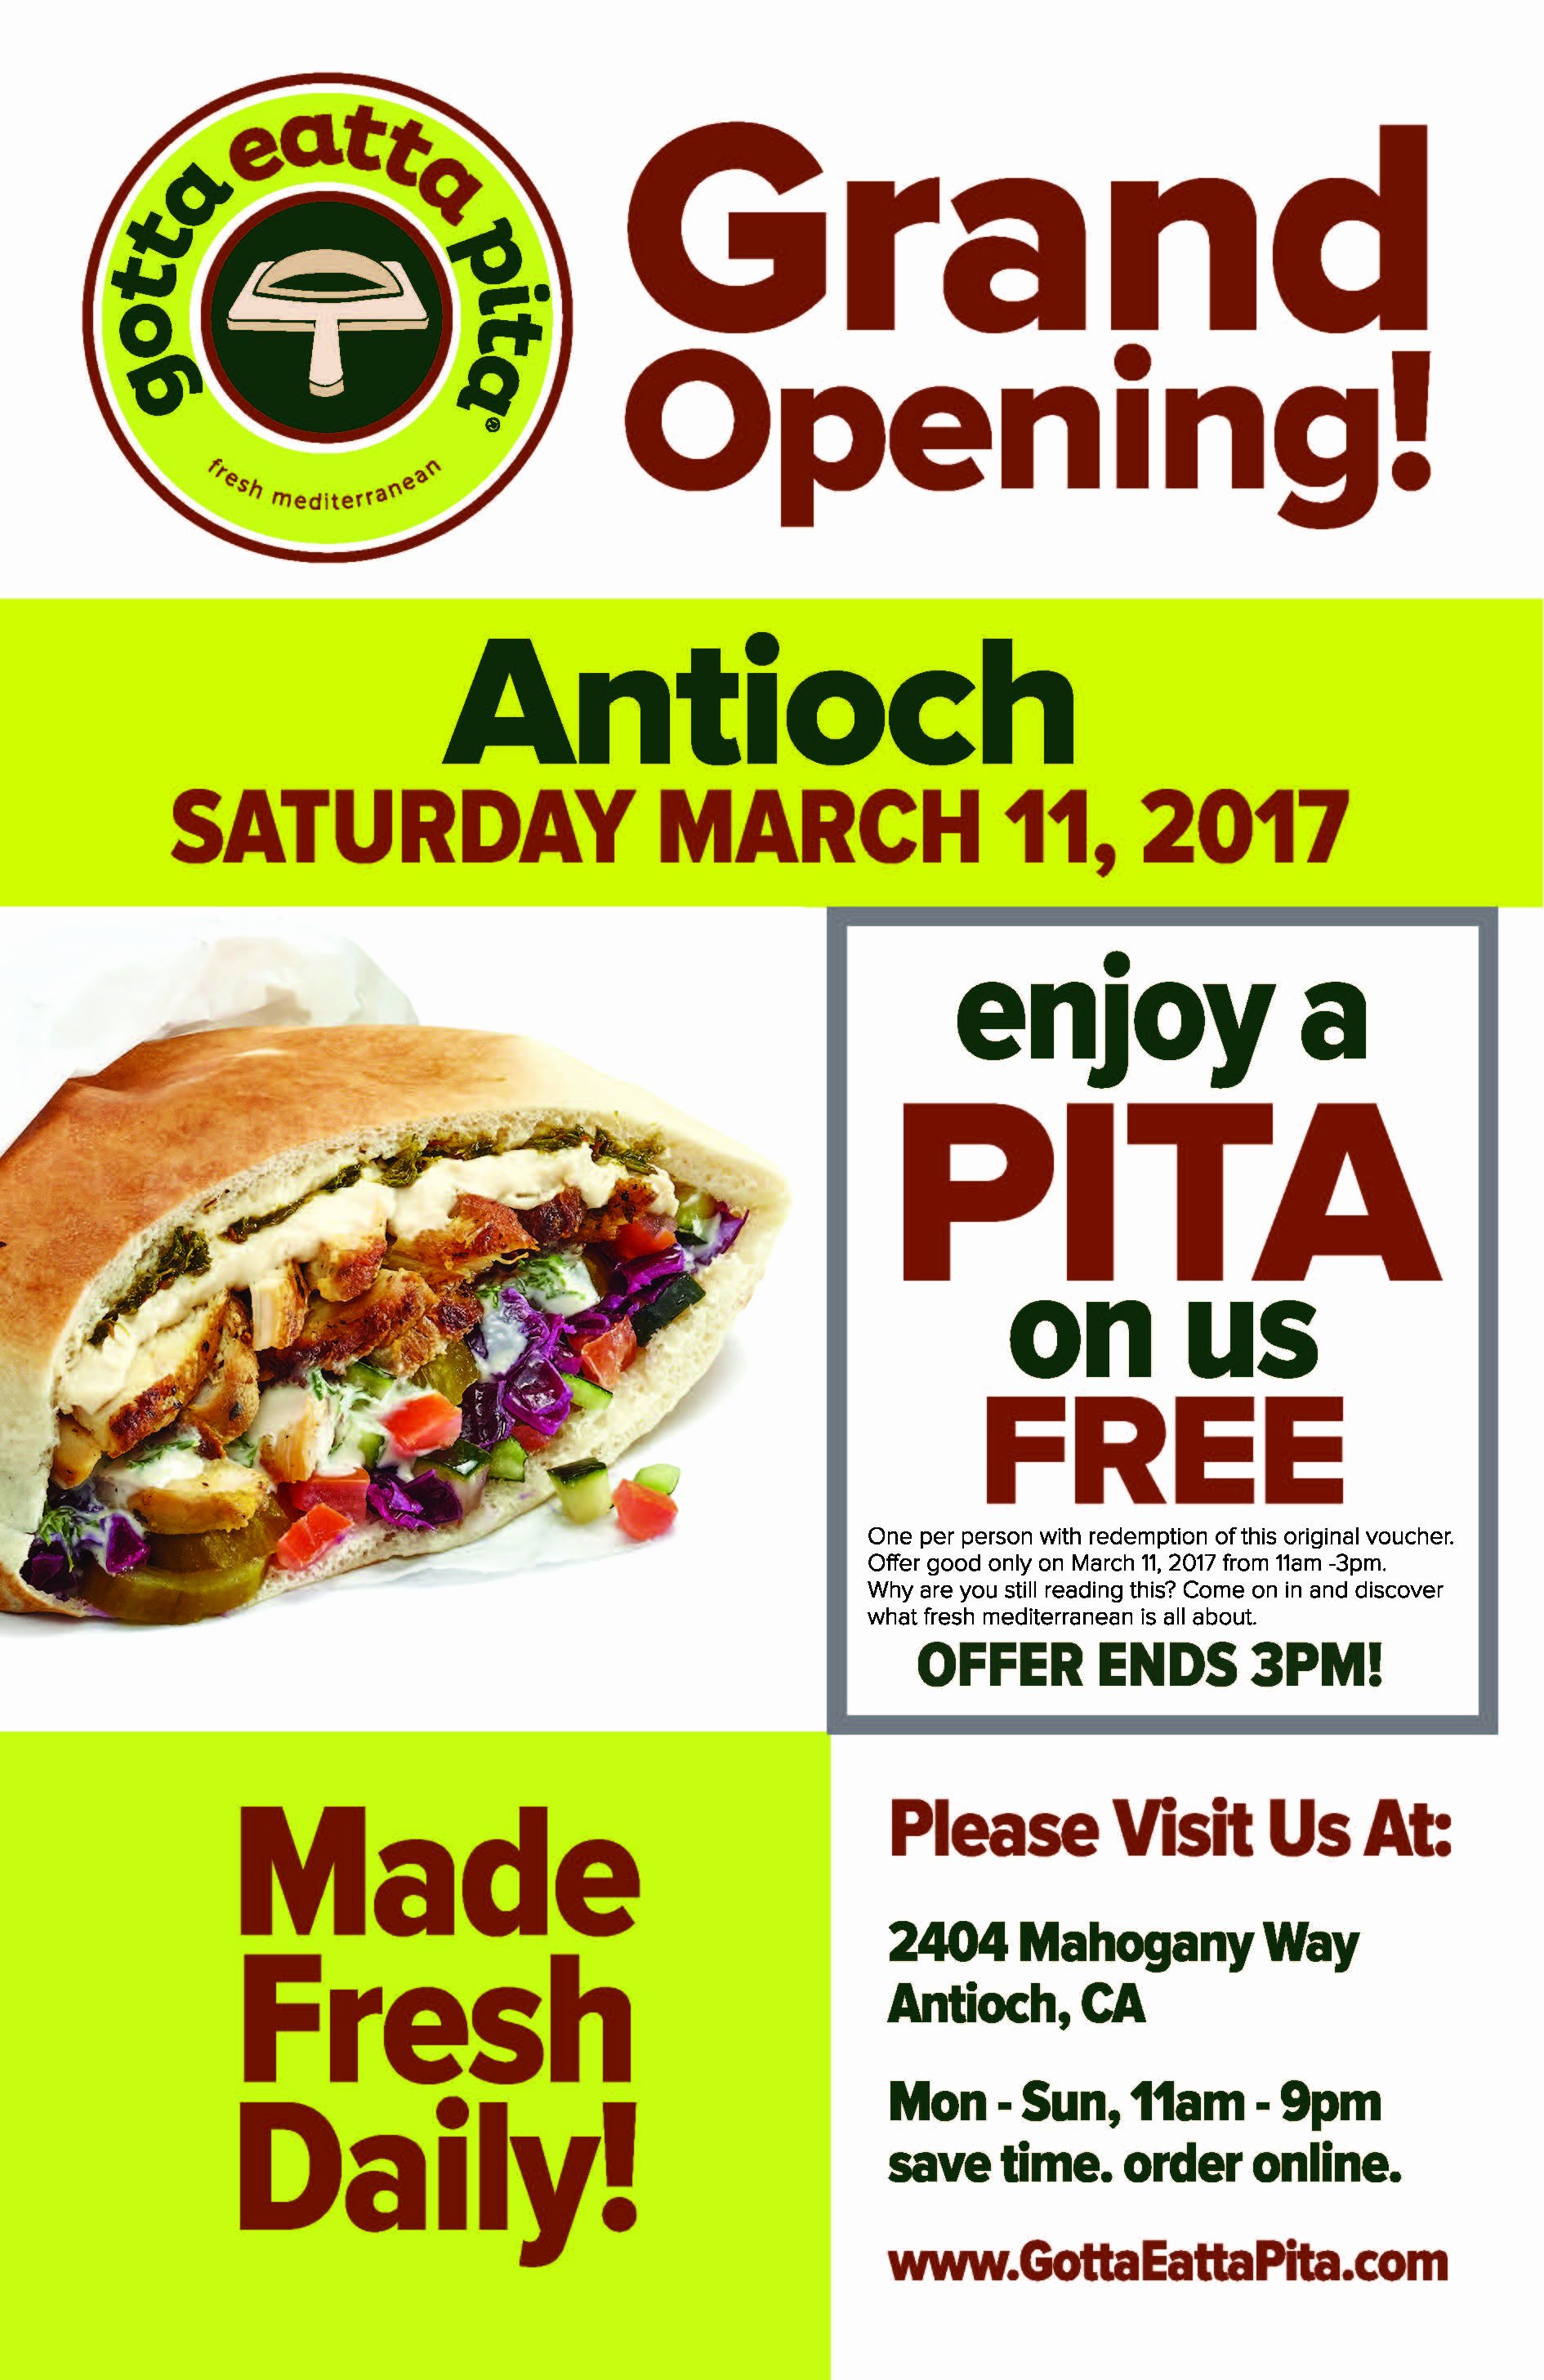 Restaurant Grand Opening Flyer Luxury Gotta Eatta Pita Restaurant now Open In Antioch Grand Opening Sat March 11